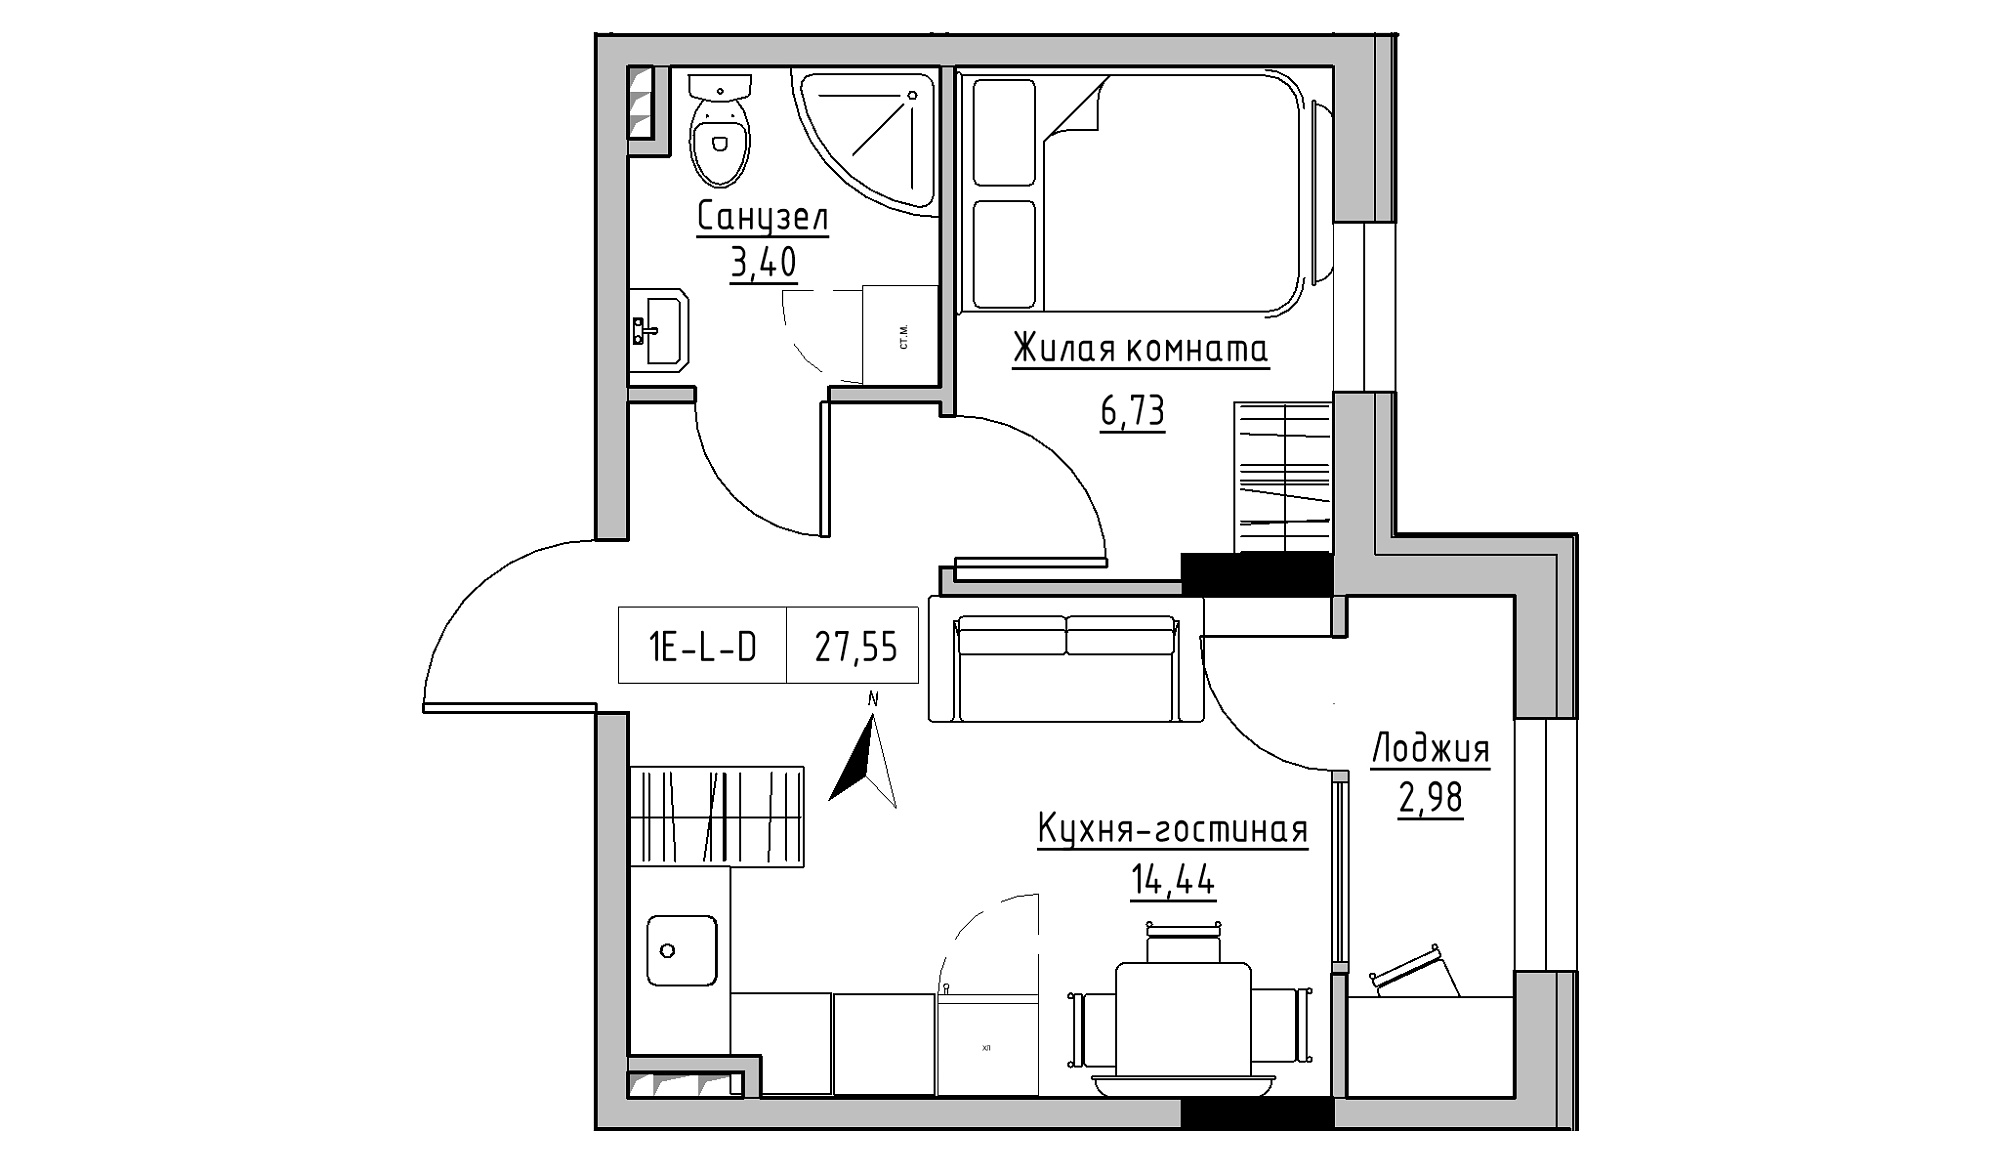 Planning 1-rm flats area 27.55m2, KS-025-02/0001.